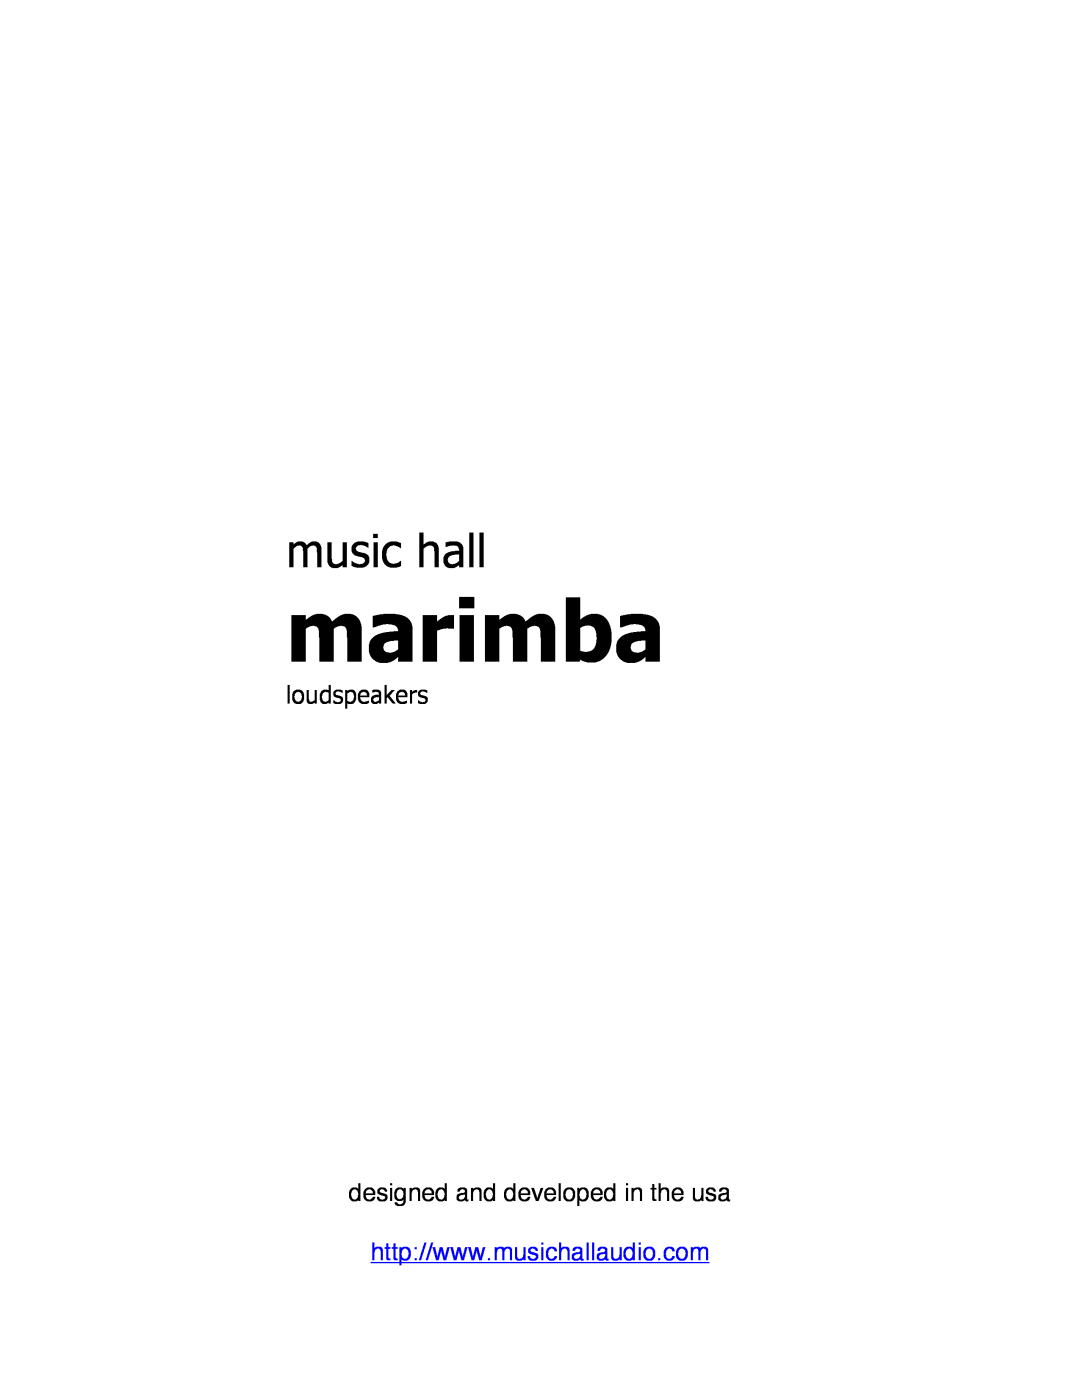 Music Hall Marimba manual marimba, music hall, loudspeakers, designed and developed in the usa 